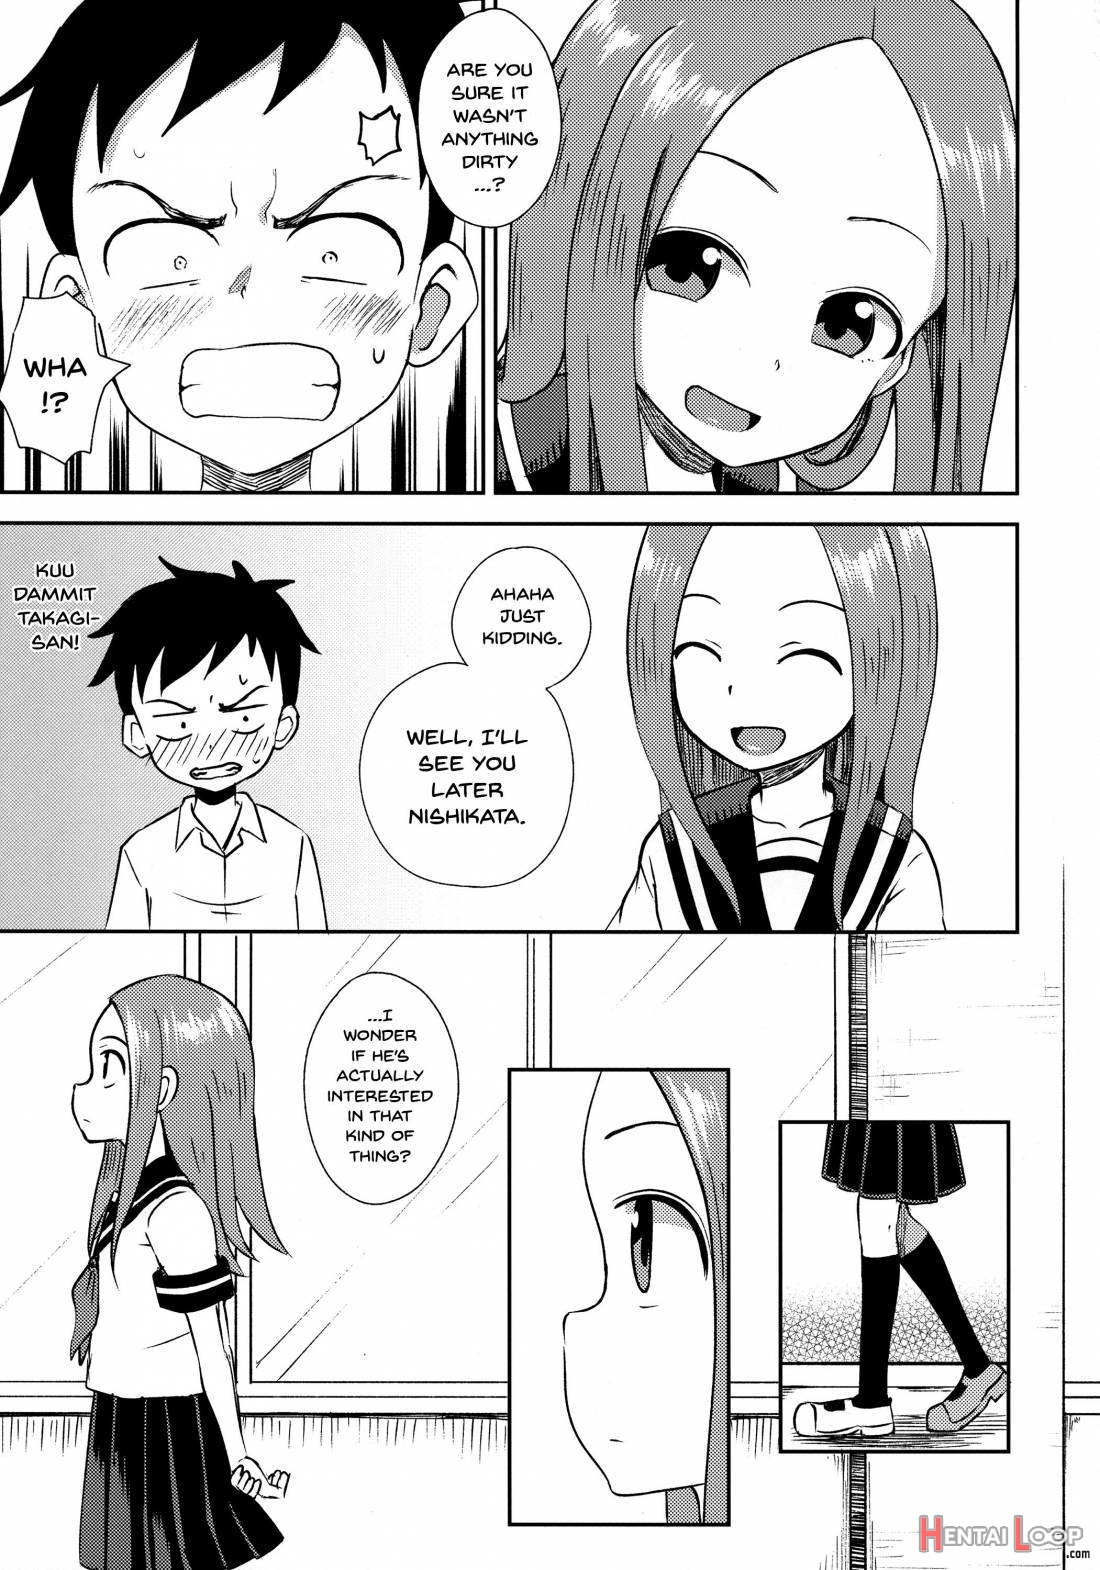 Takagi-san Escalate page 4